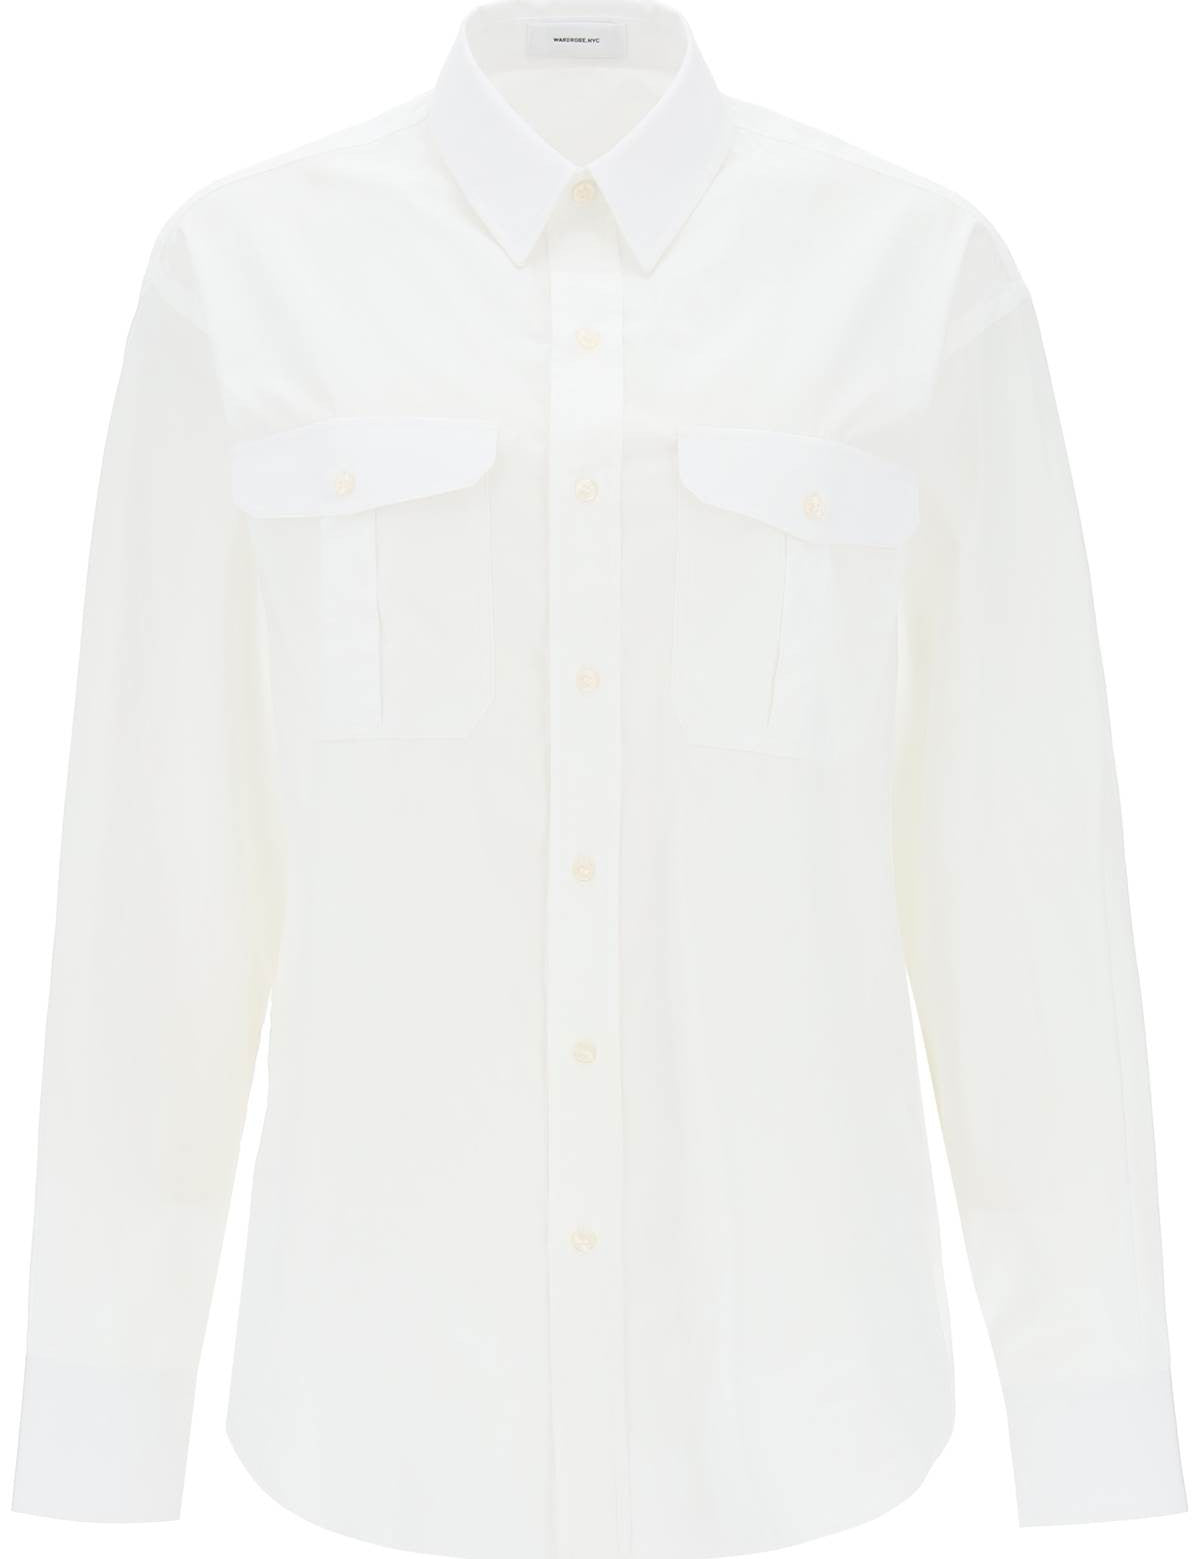 wardrobenyc-maxi-shirt-in-cotton-batista.jpg